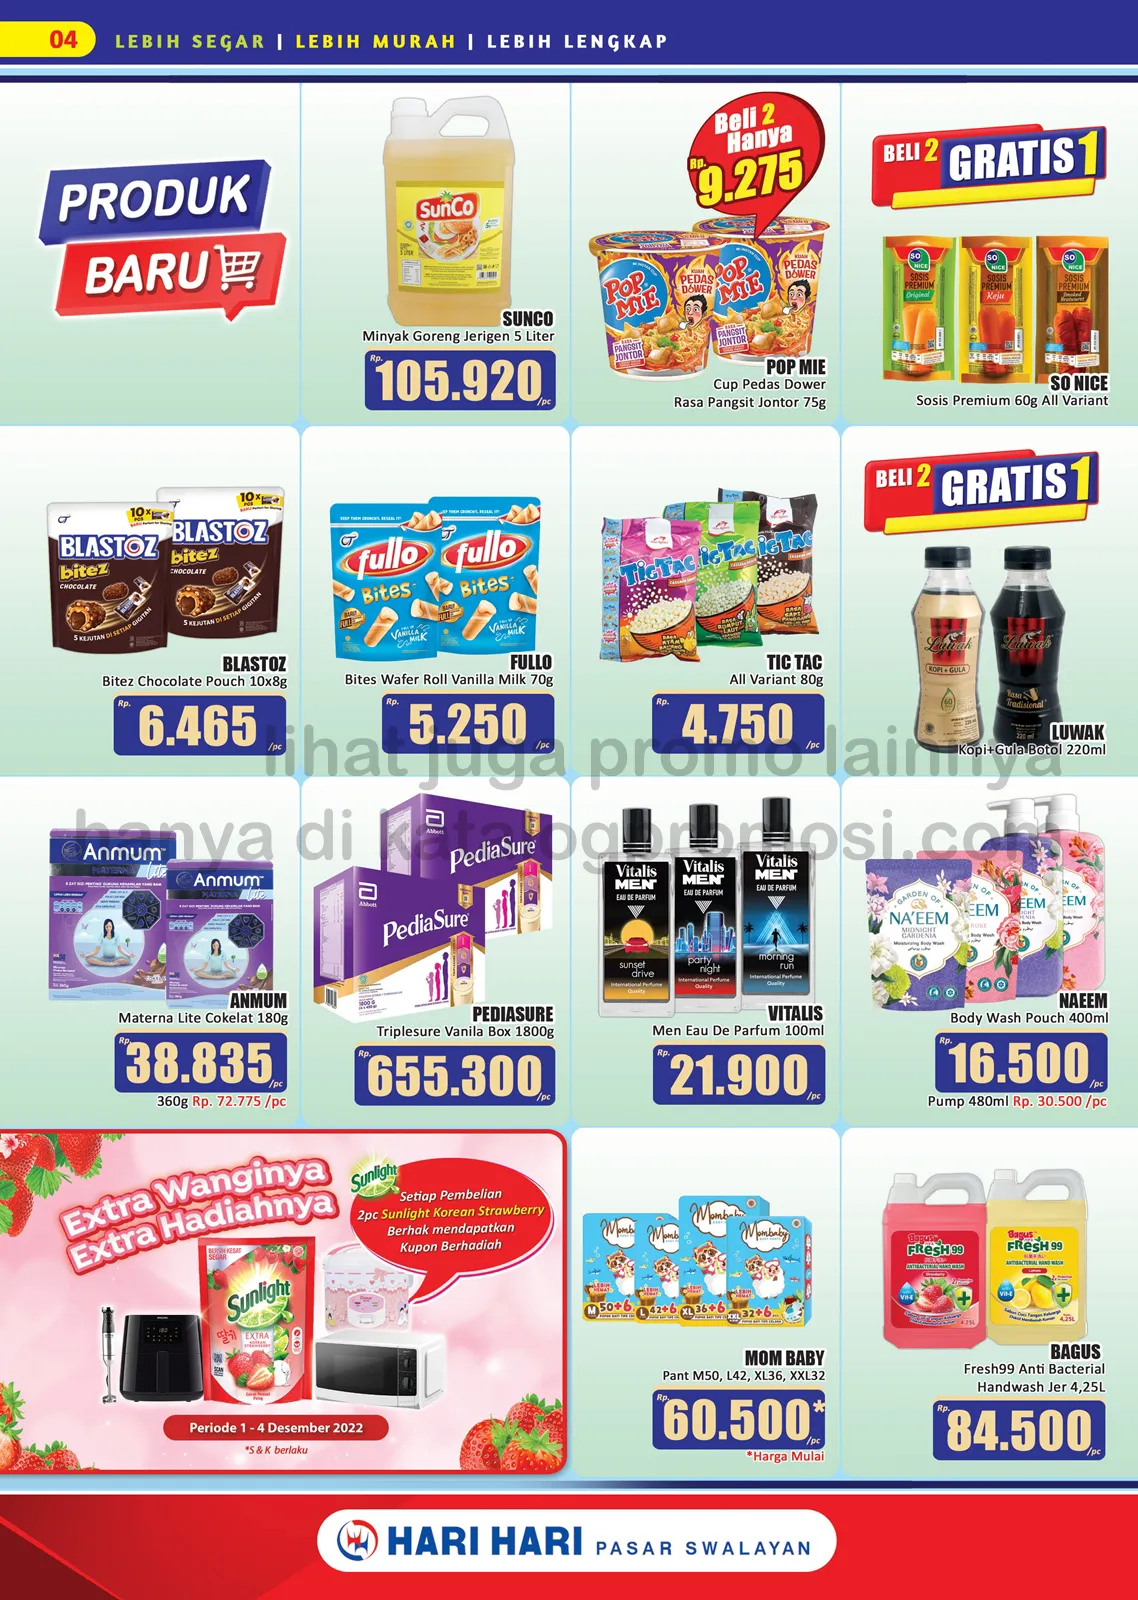 Promo Hari Hari Pasar Swalayan Katalog Mingguan | 01-14 Desember 2022